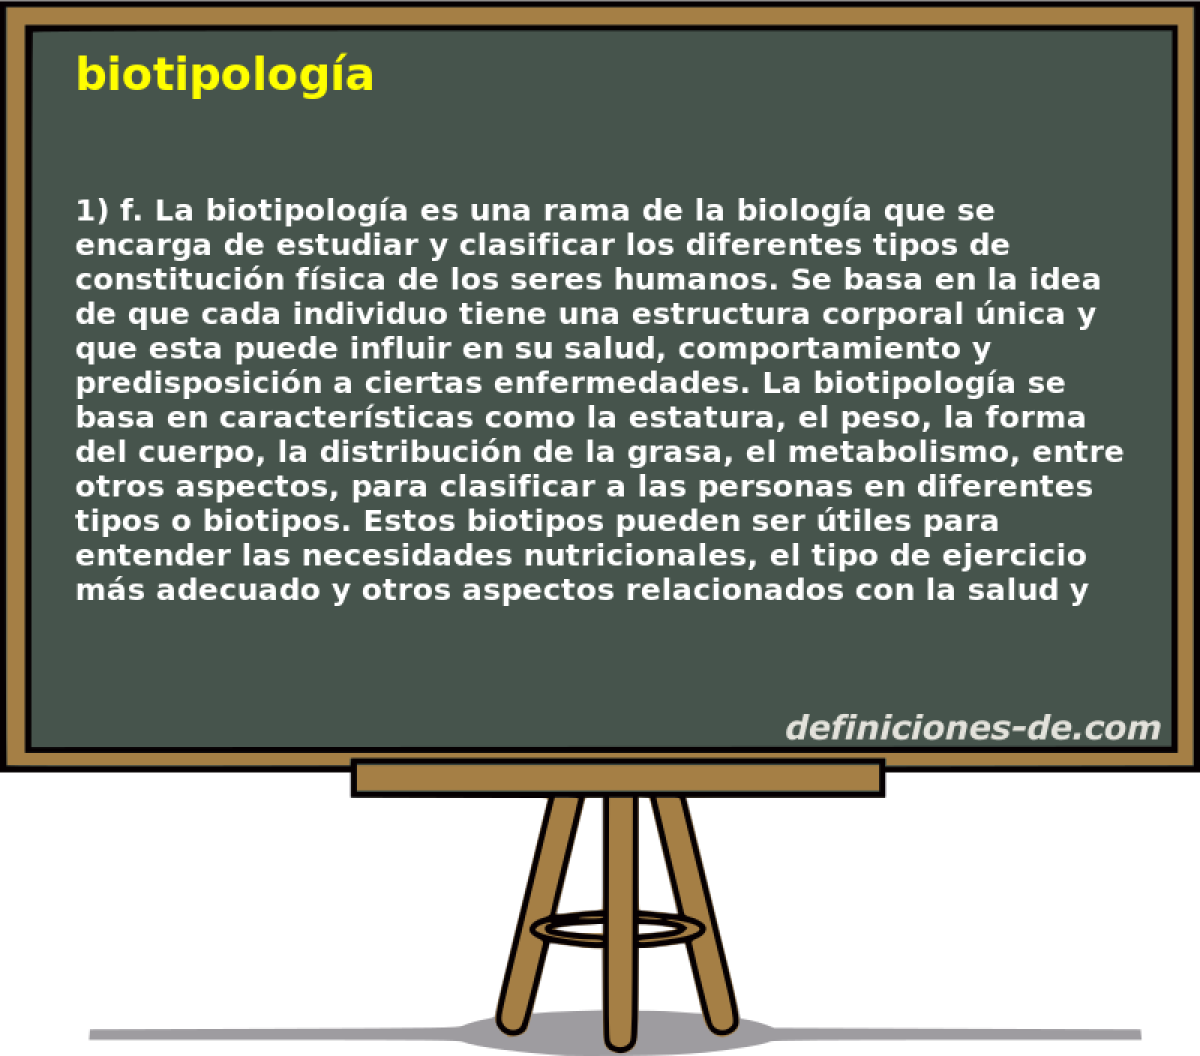 biotipologa 